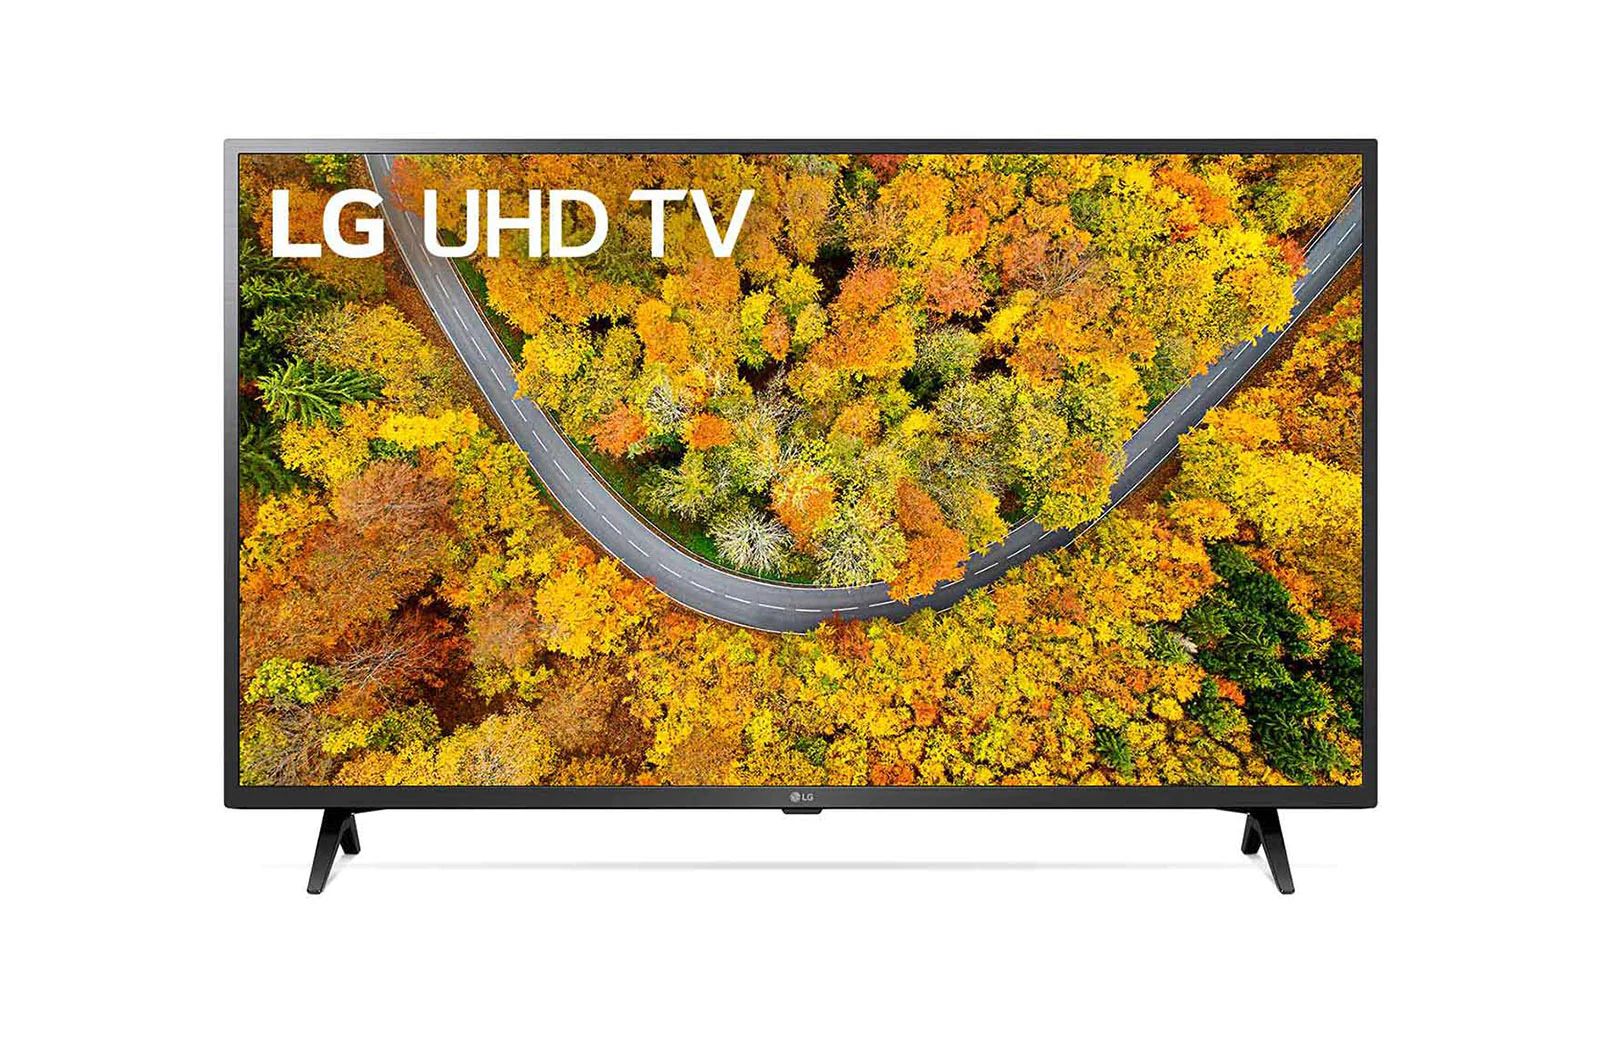 Hd Plus Tv Videoxxx - LG UP7550 43'' UHD 4K TV | LG Bangladesh